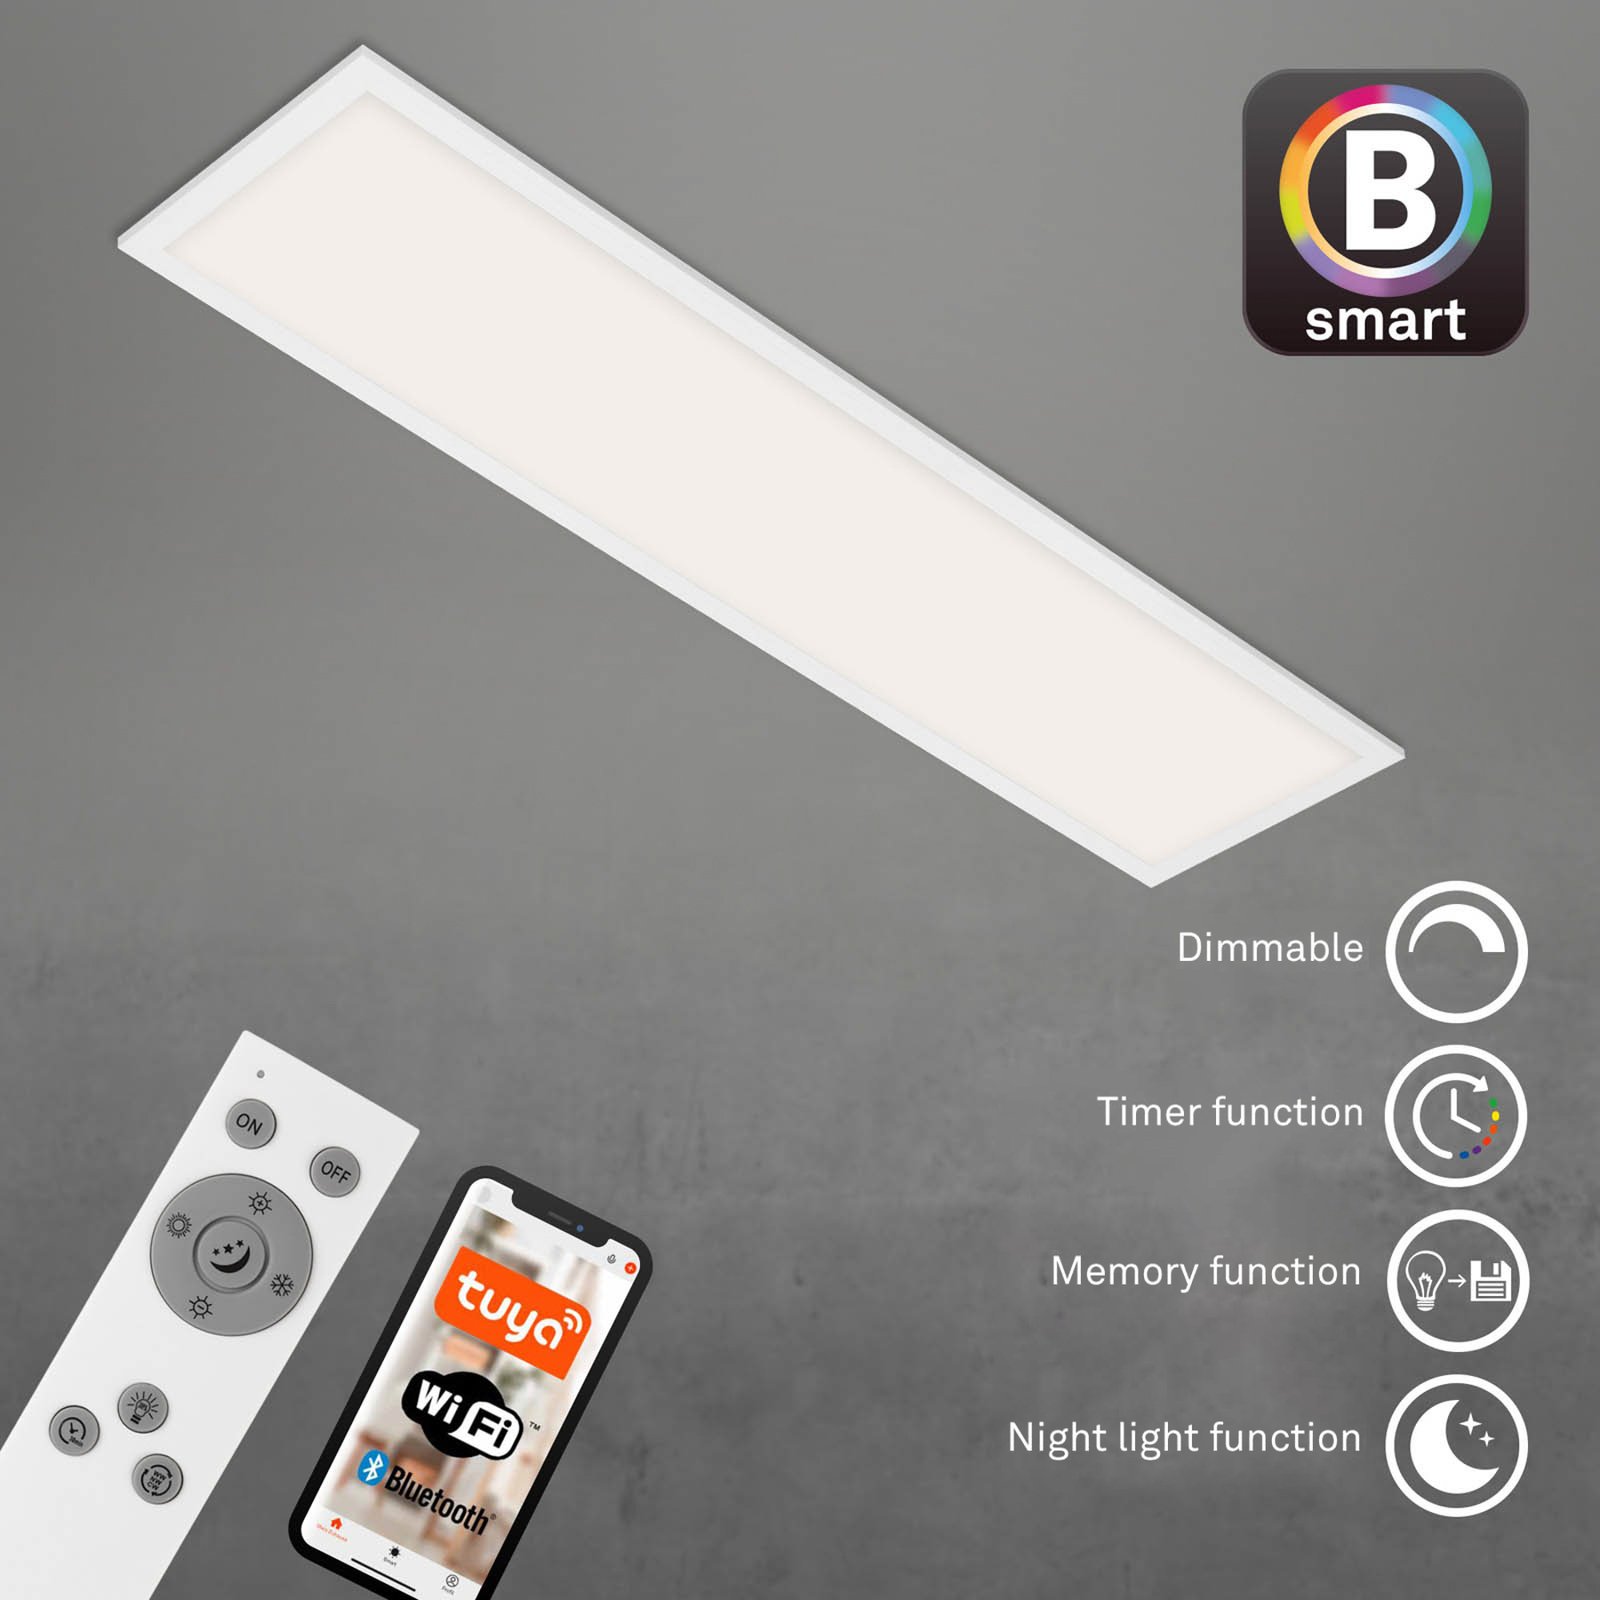 Plafonnier LED Piatto S dimmable CCT blanc 100x25cm